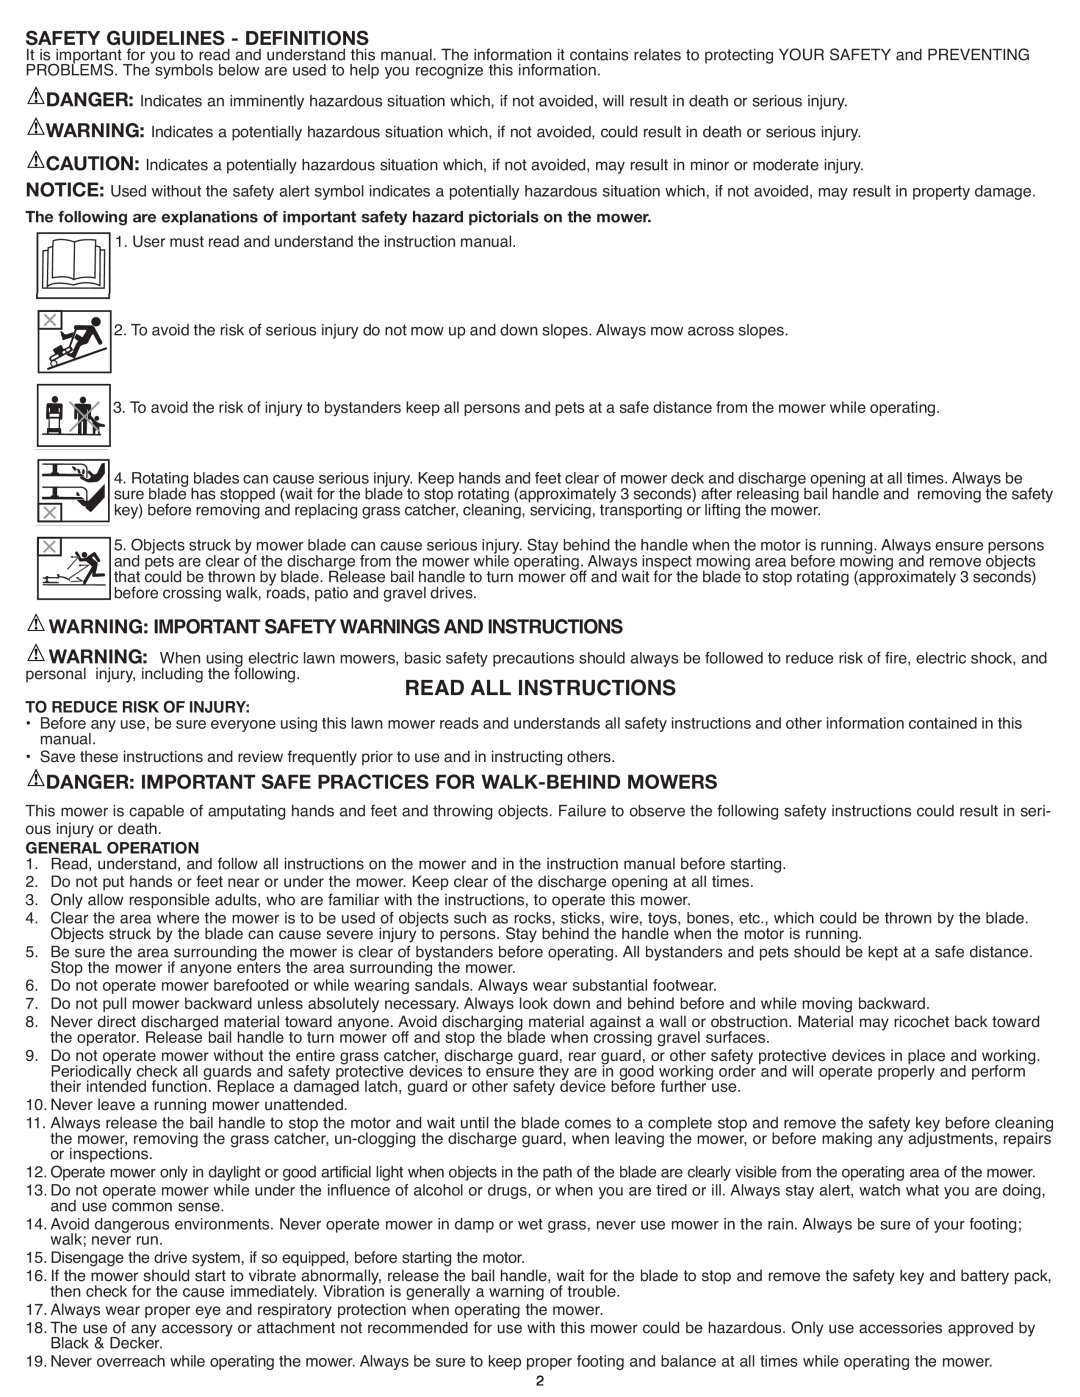 Black & Decker CM1936ZF2 instruction manual Read All Instructions, Warning: Important Safetywarningsand Instructions 